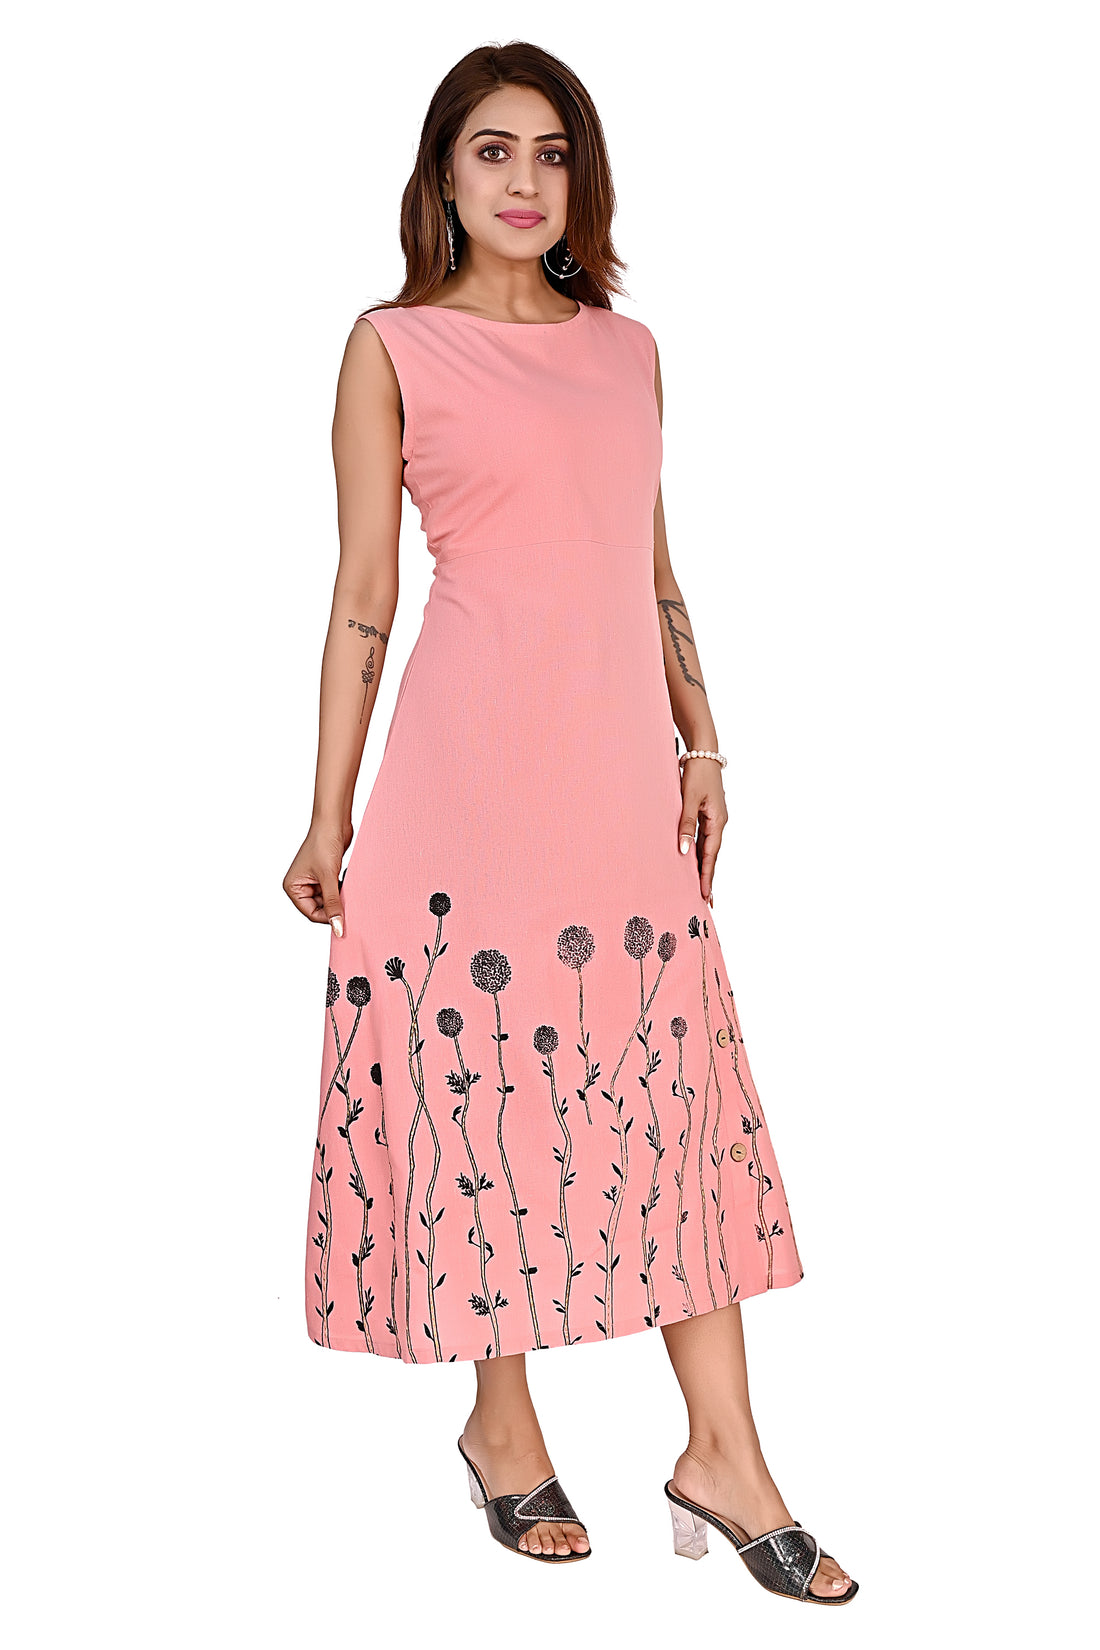 Nirmal online Premium cotton tunic Dress for Women in Peach Pink colour